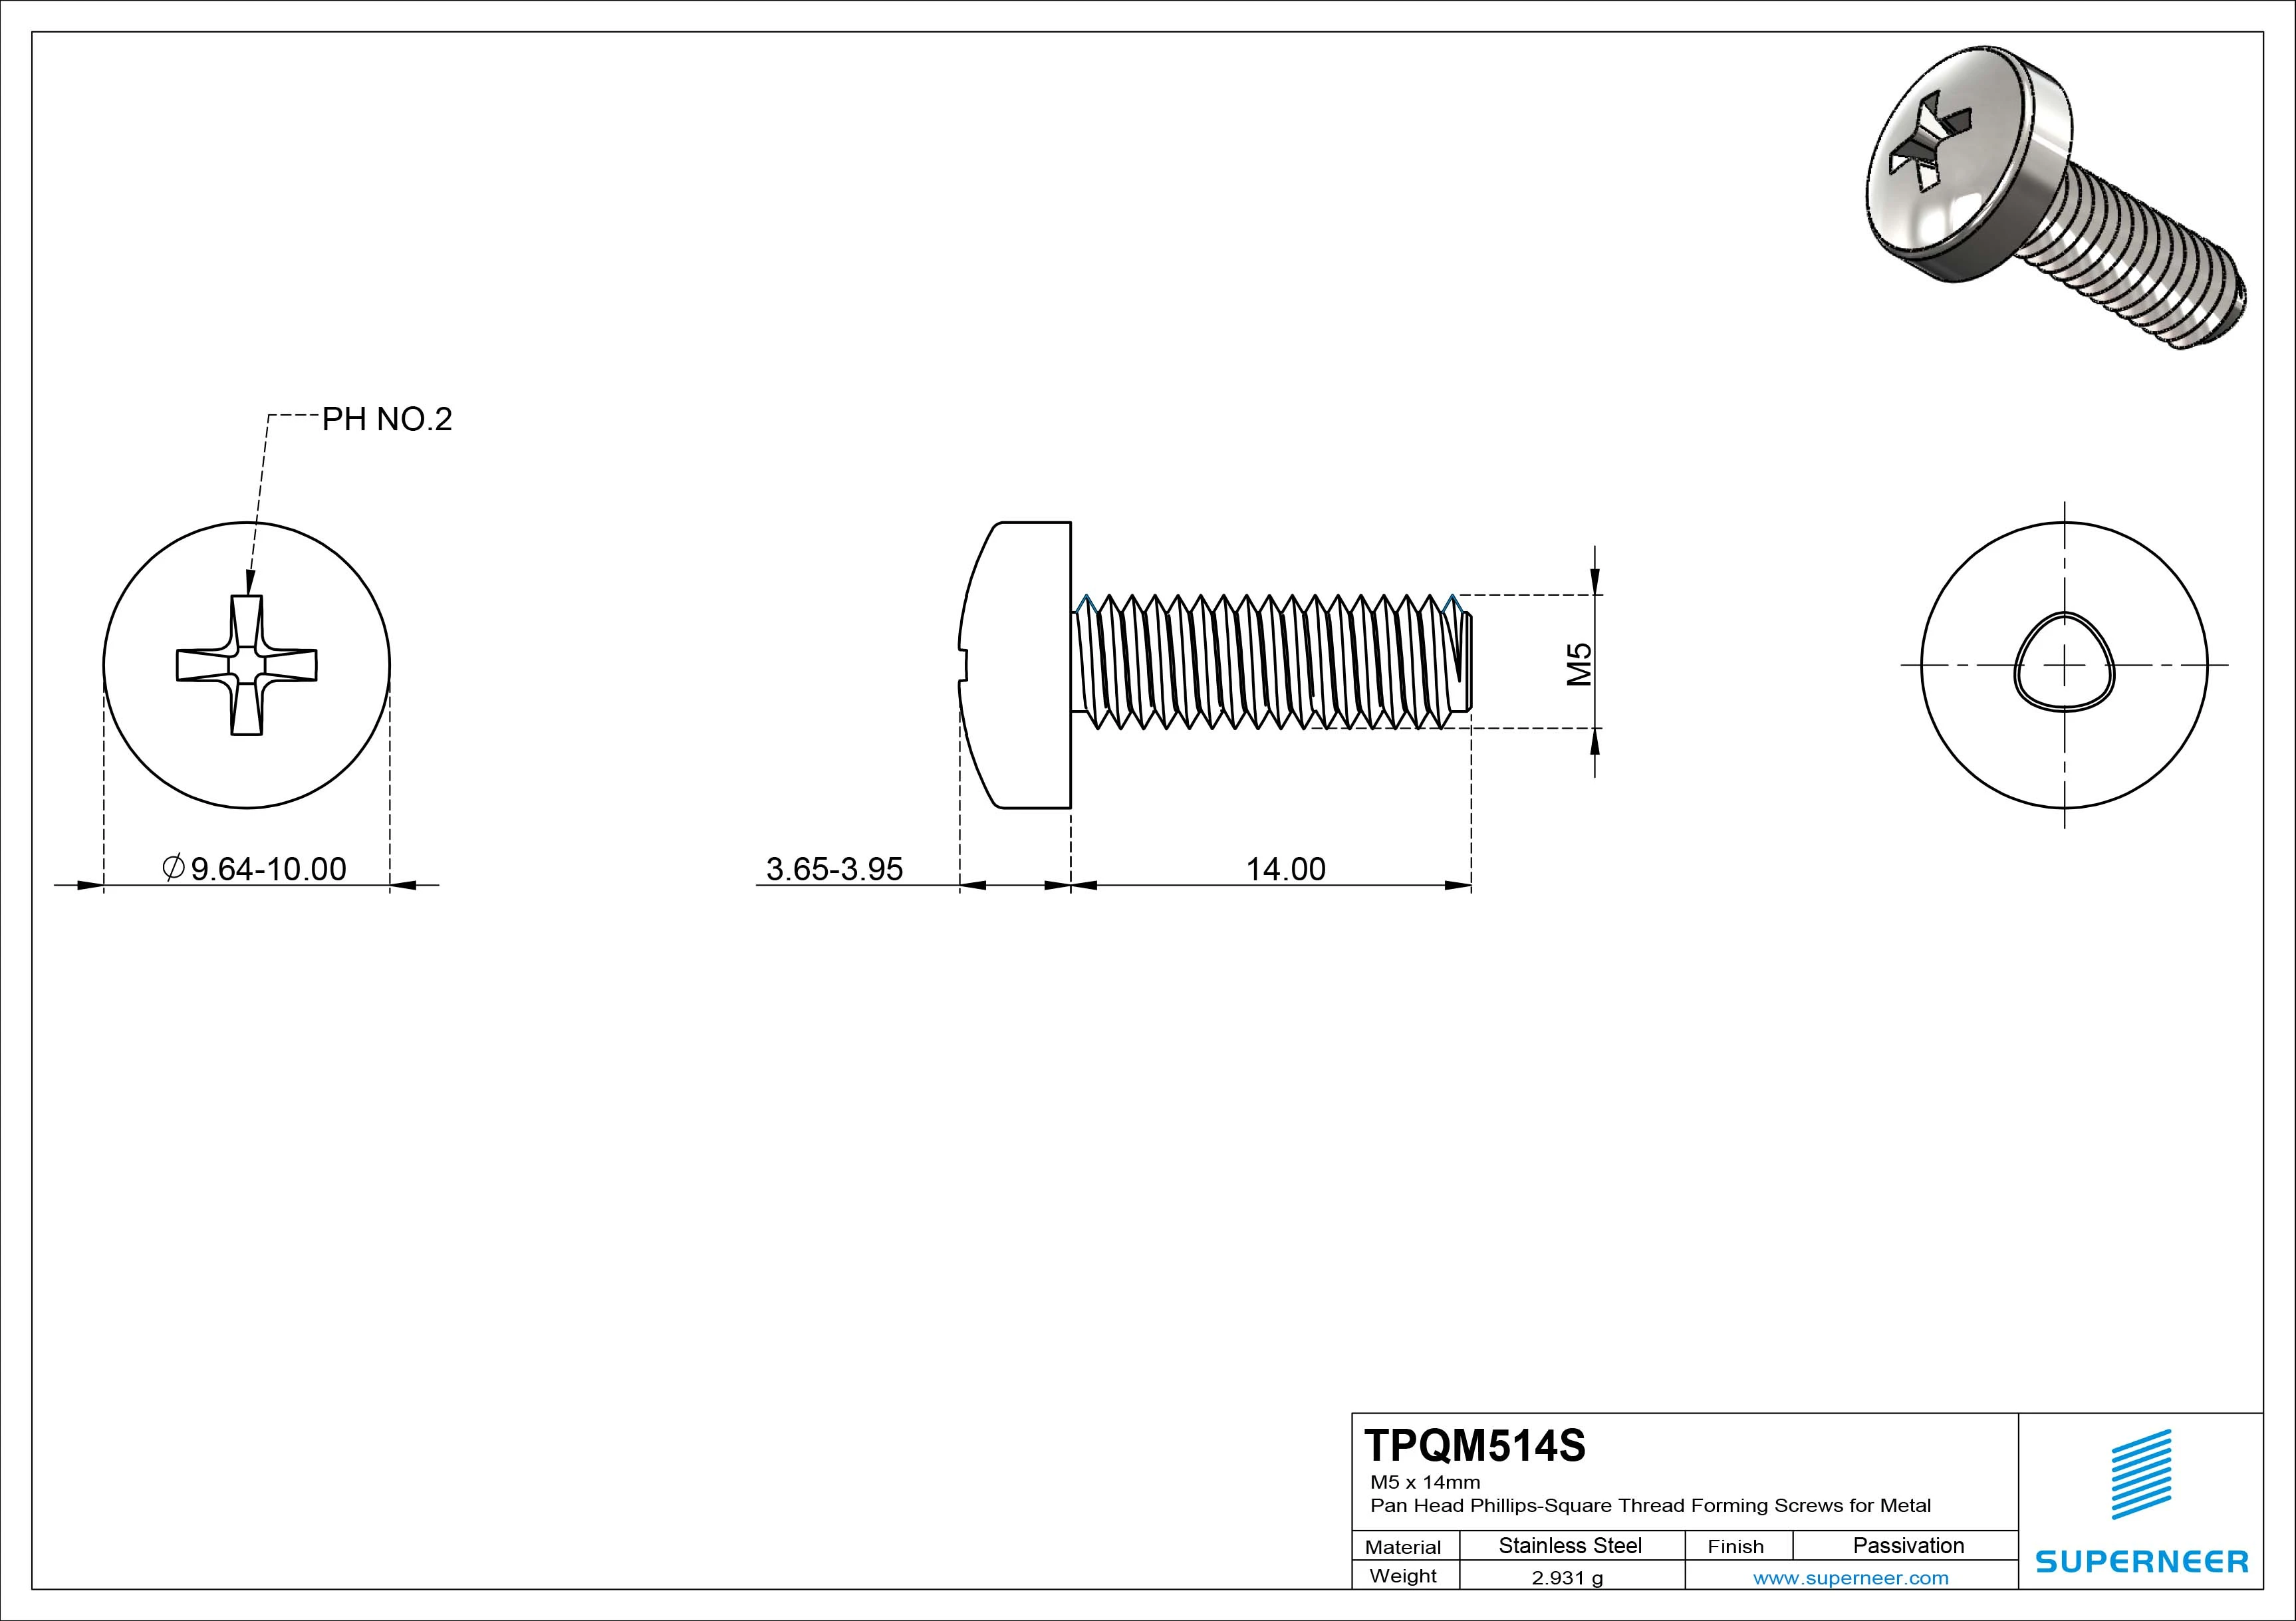 M5 × 14mm Pan Head Phillips-Square Thread Forming Screws for Metal SUS304 Stainless Steel Inox